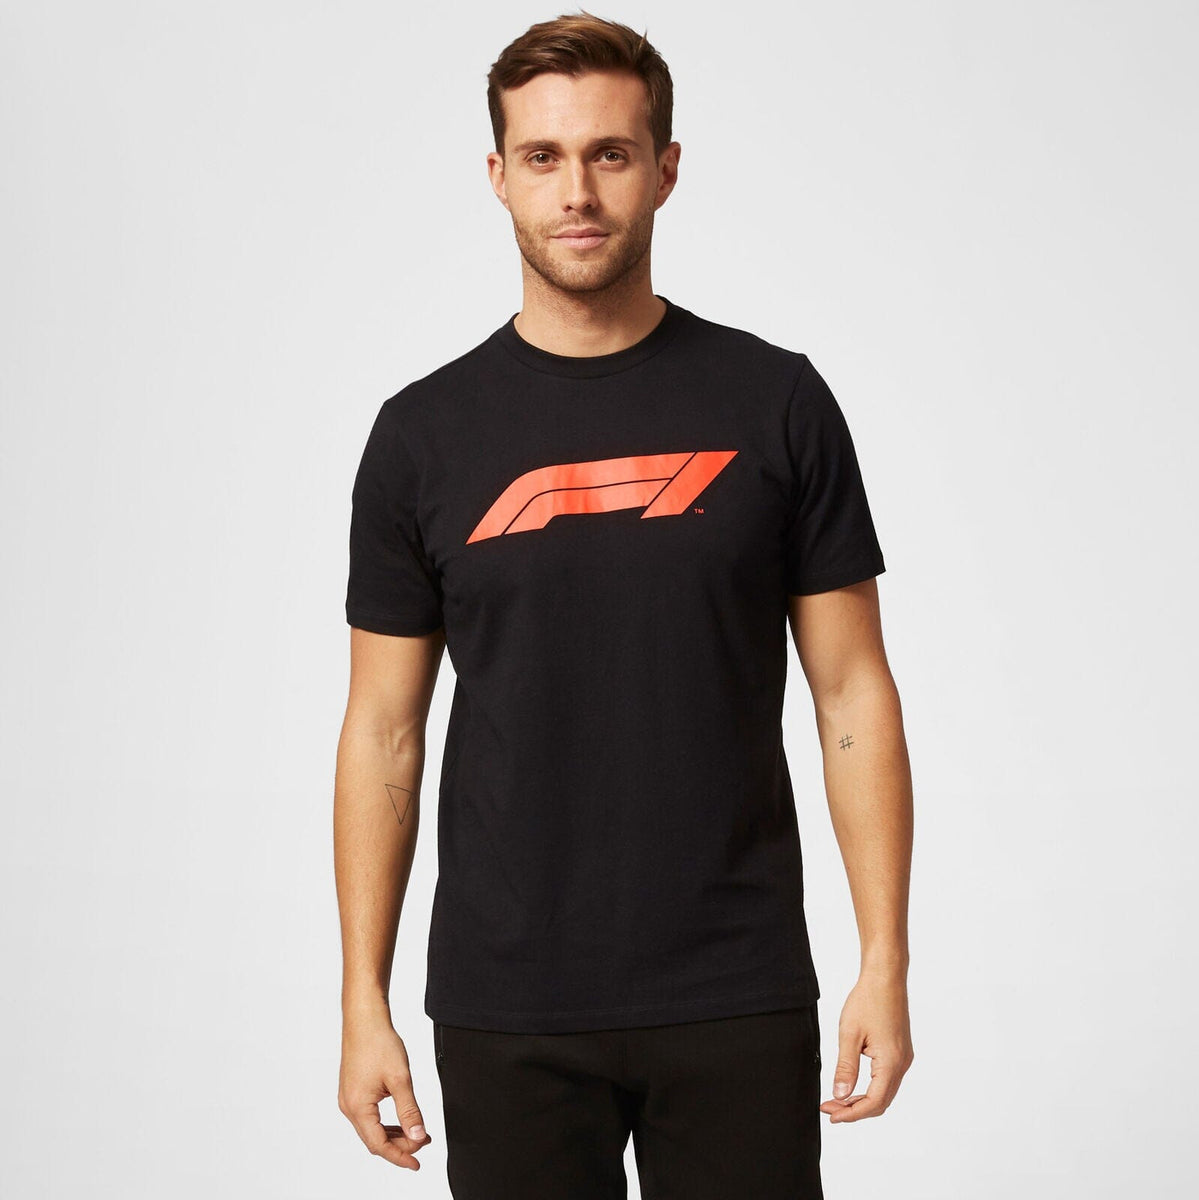 FORMULA 1 SHIRTS, Racing T-Shirts